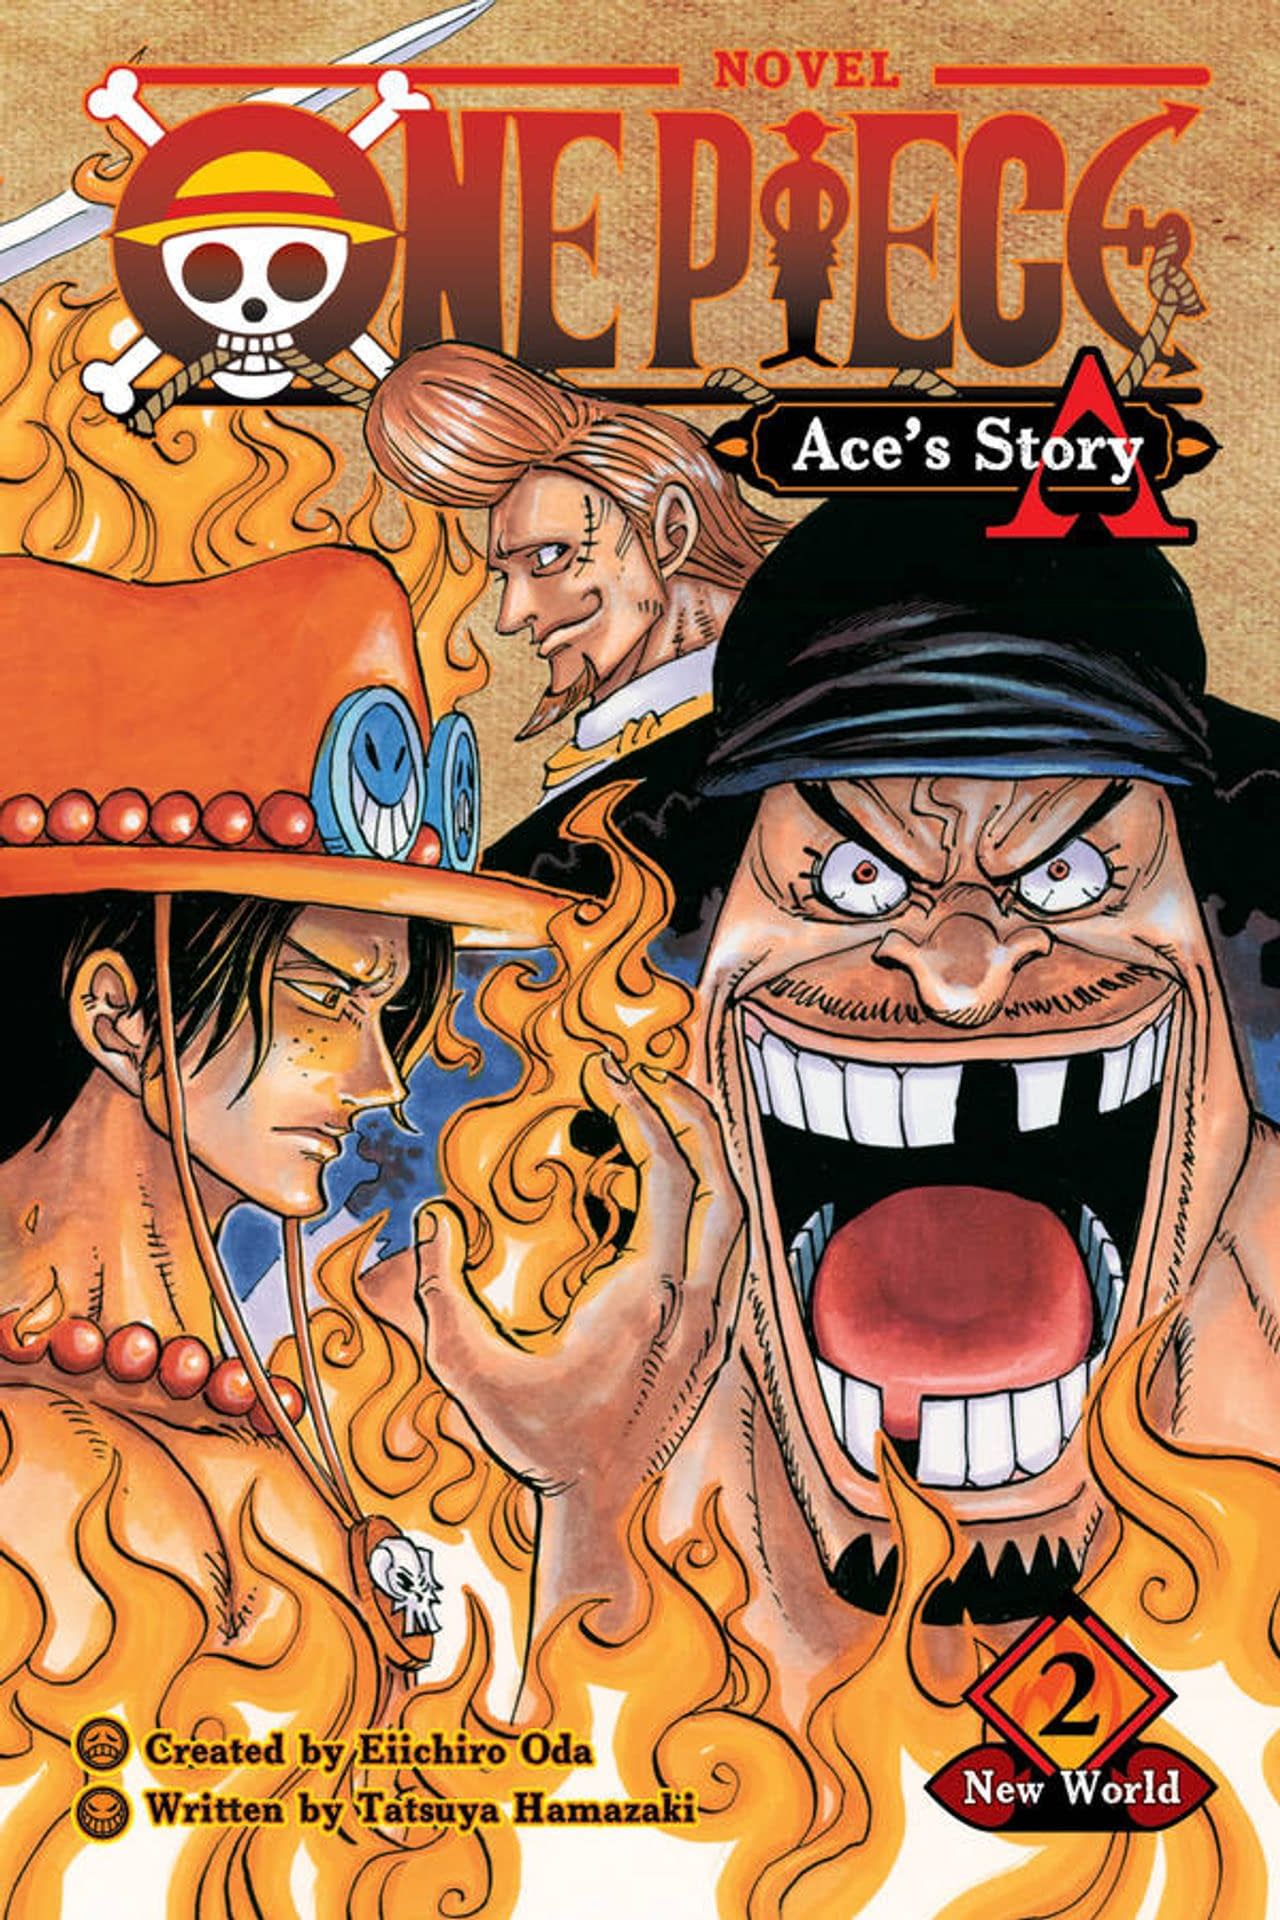 Naruto One Piece Bleach Manga Light Novel Spinoff Round Up